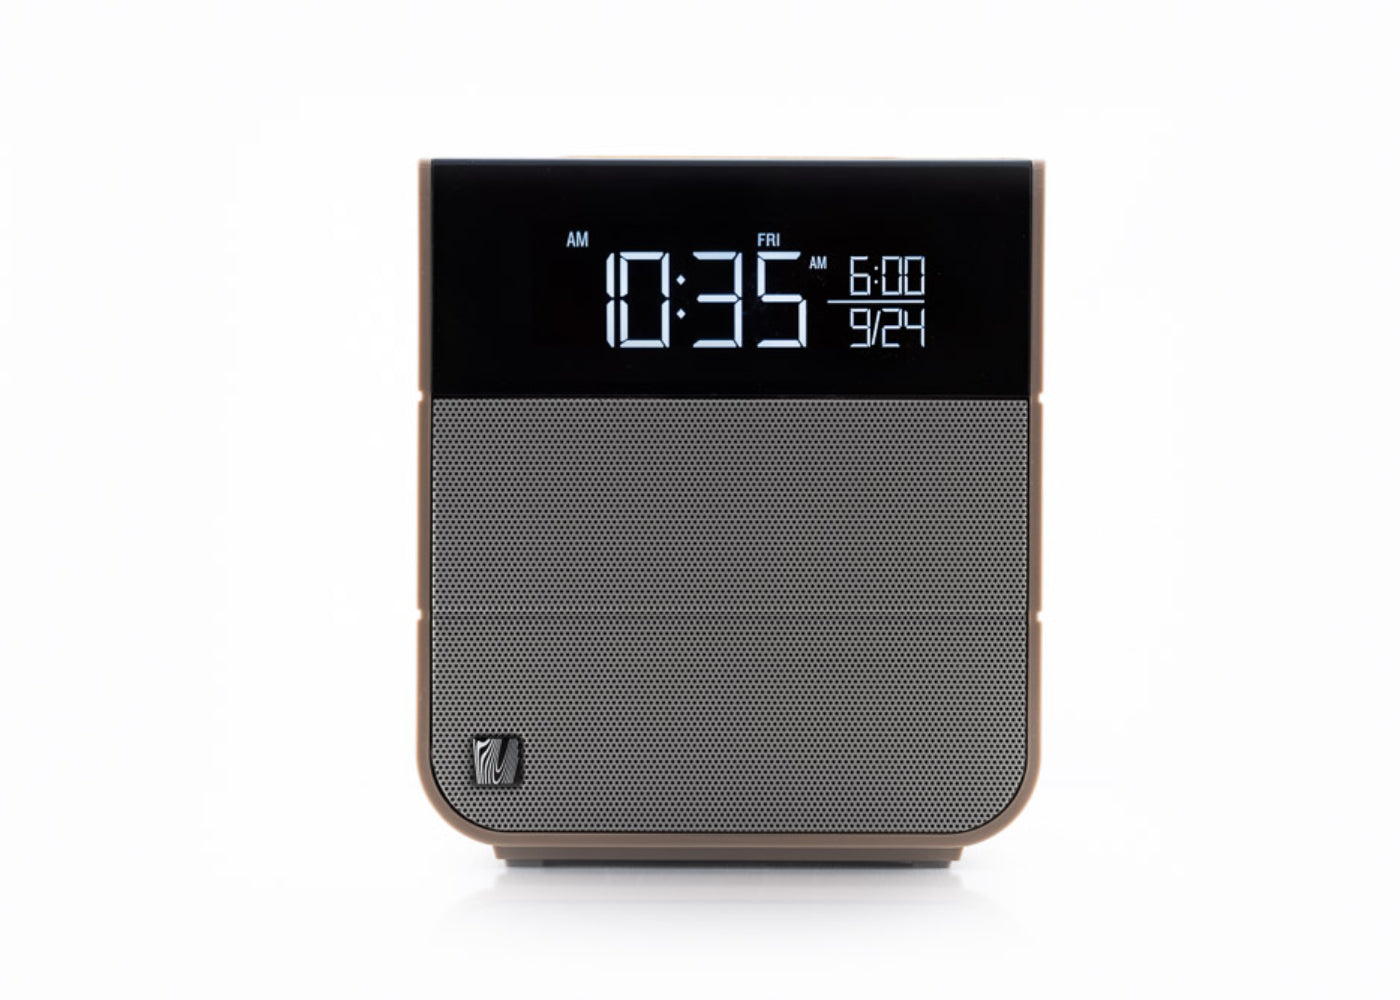 Award-Winning Bluetooth Speakers & Alarm Clocks - The World of